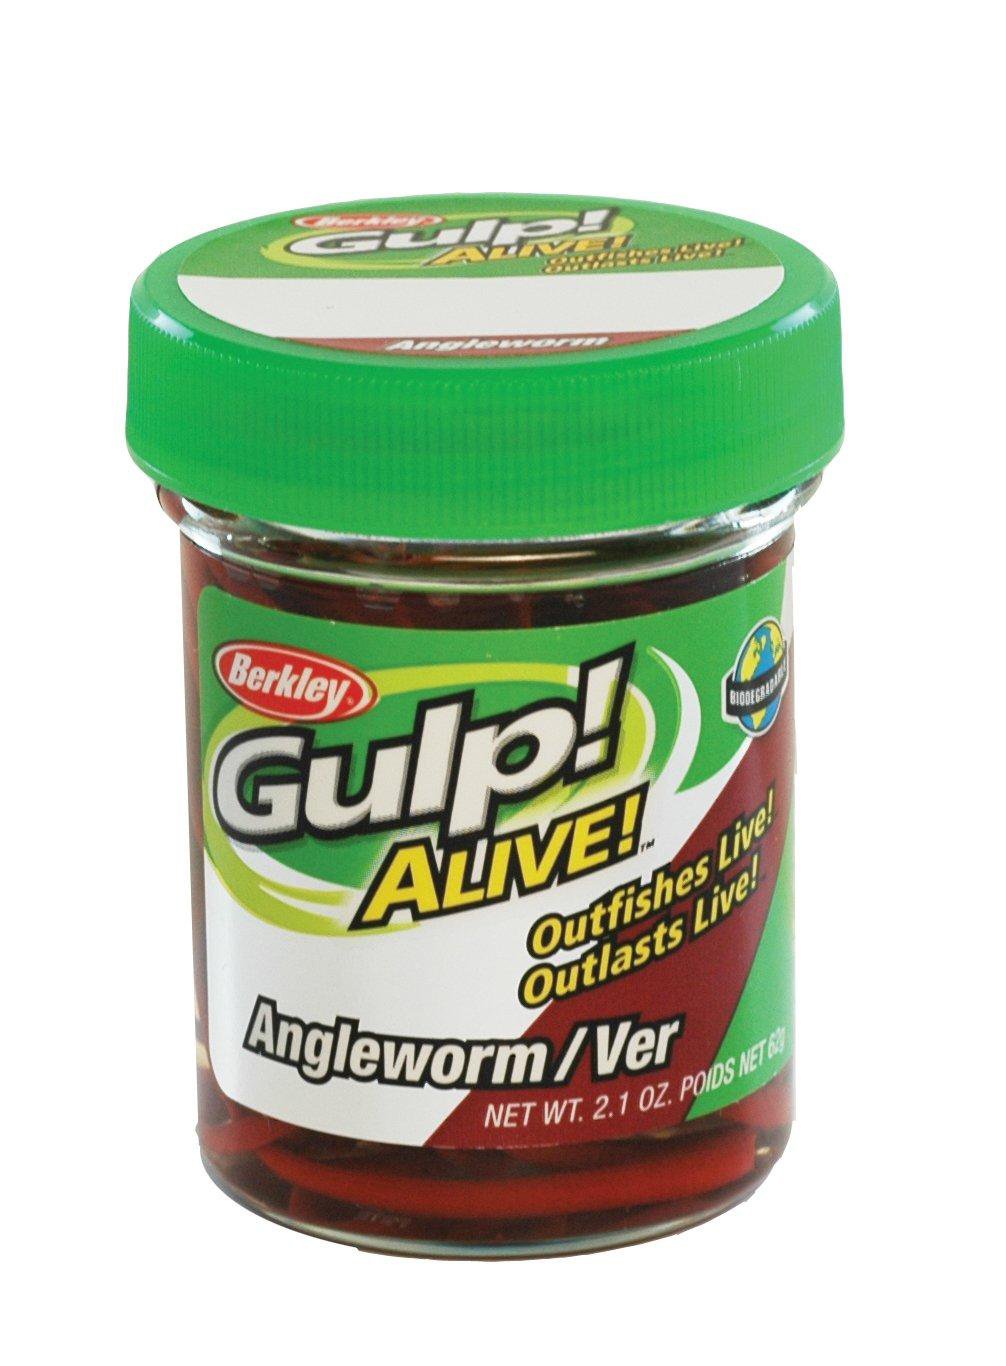 Berkley Gulp Alive 1 Angle Worm Bait Jar